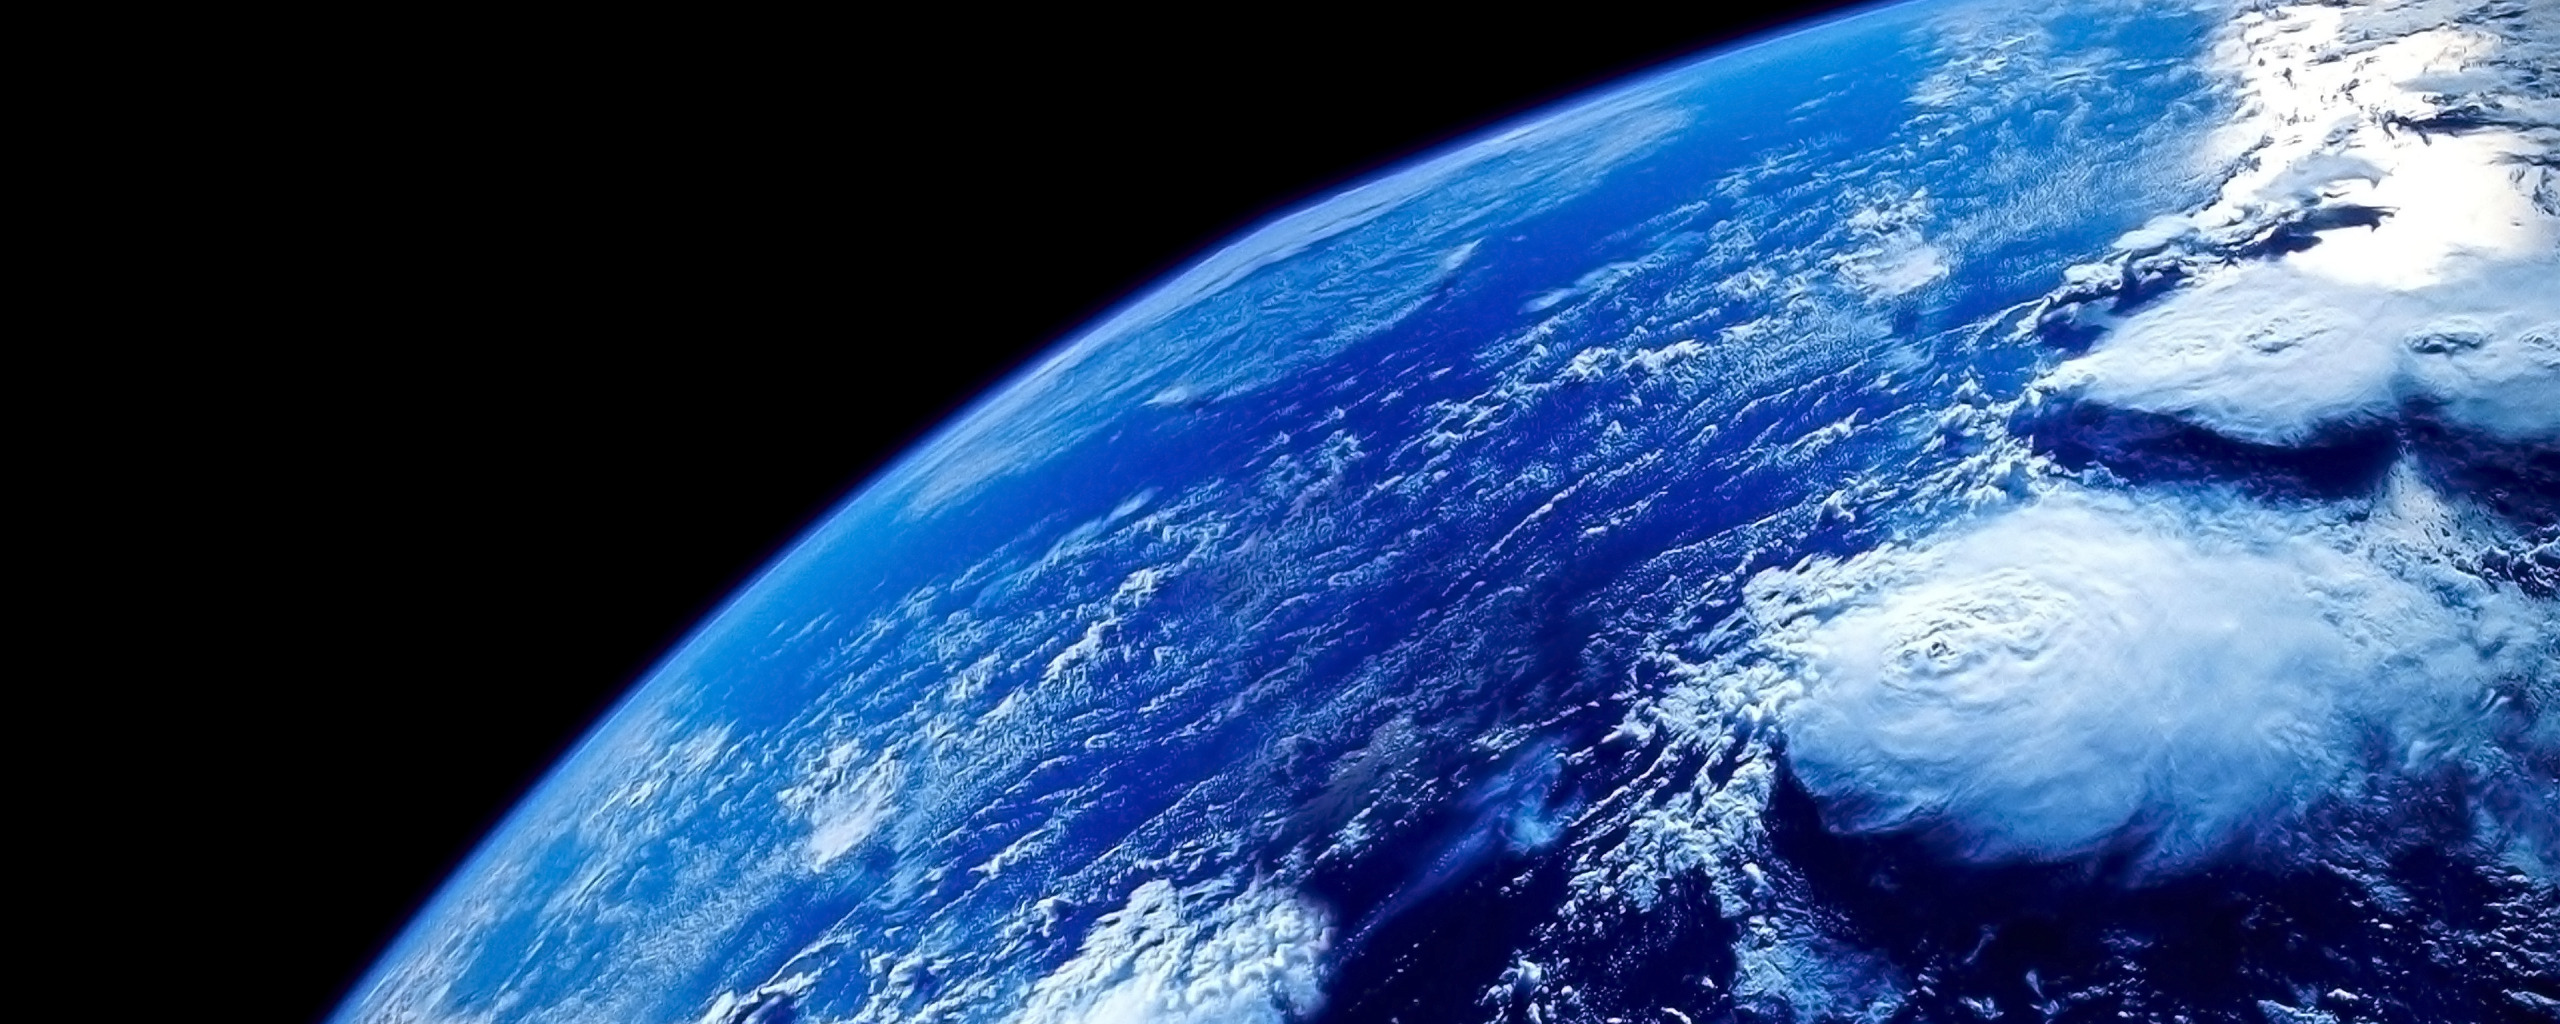 Самая голубая планета. Атмосфера земли. О земле и космосе. Атмосфера планеты земля. Земная атмосфера.